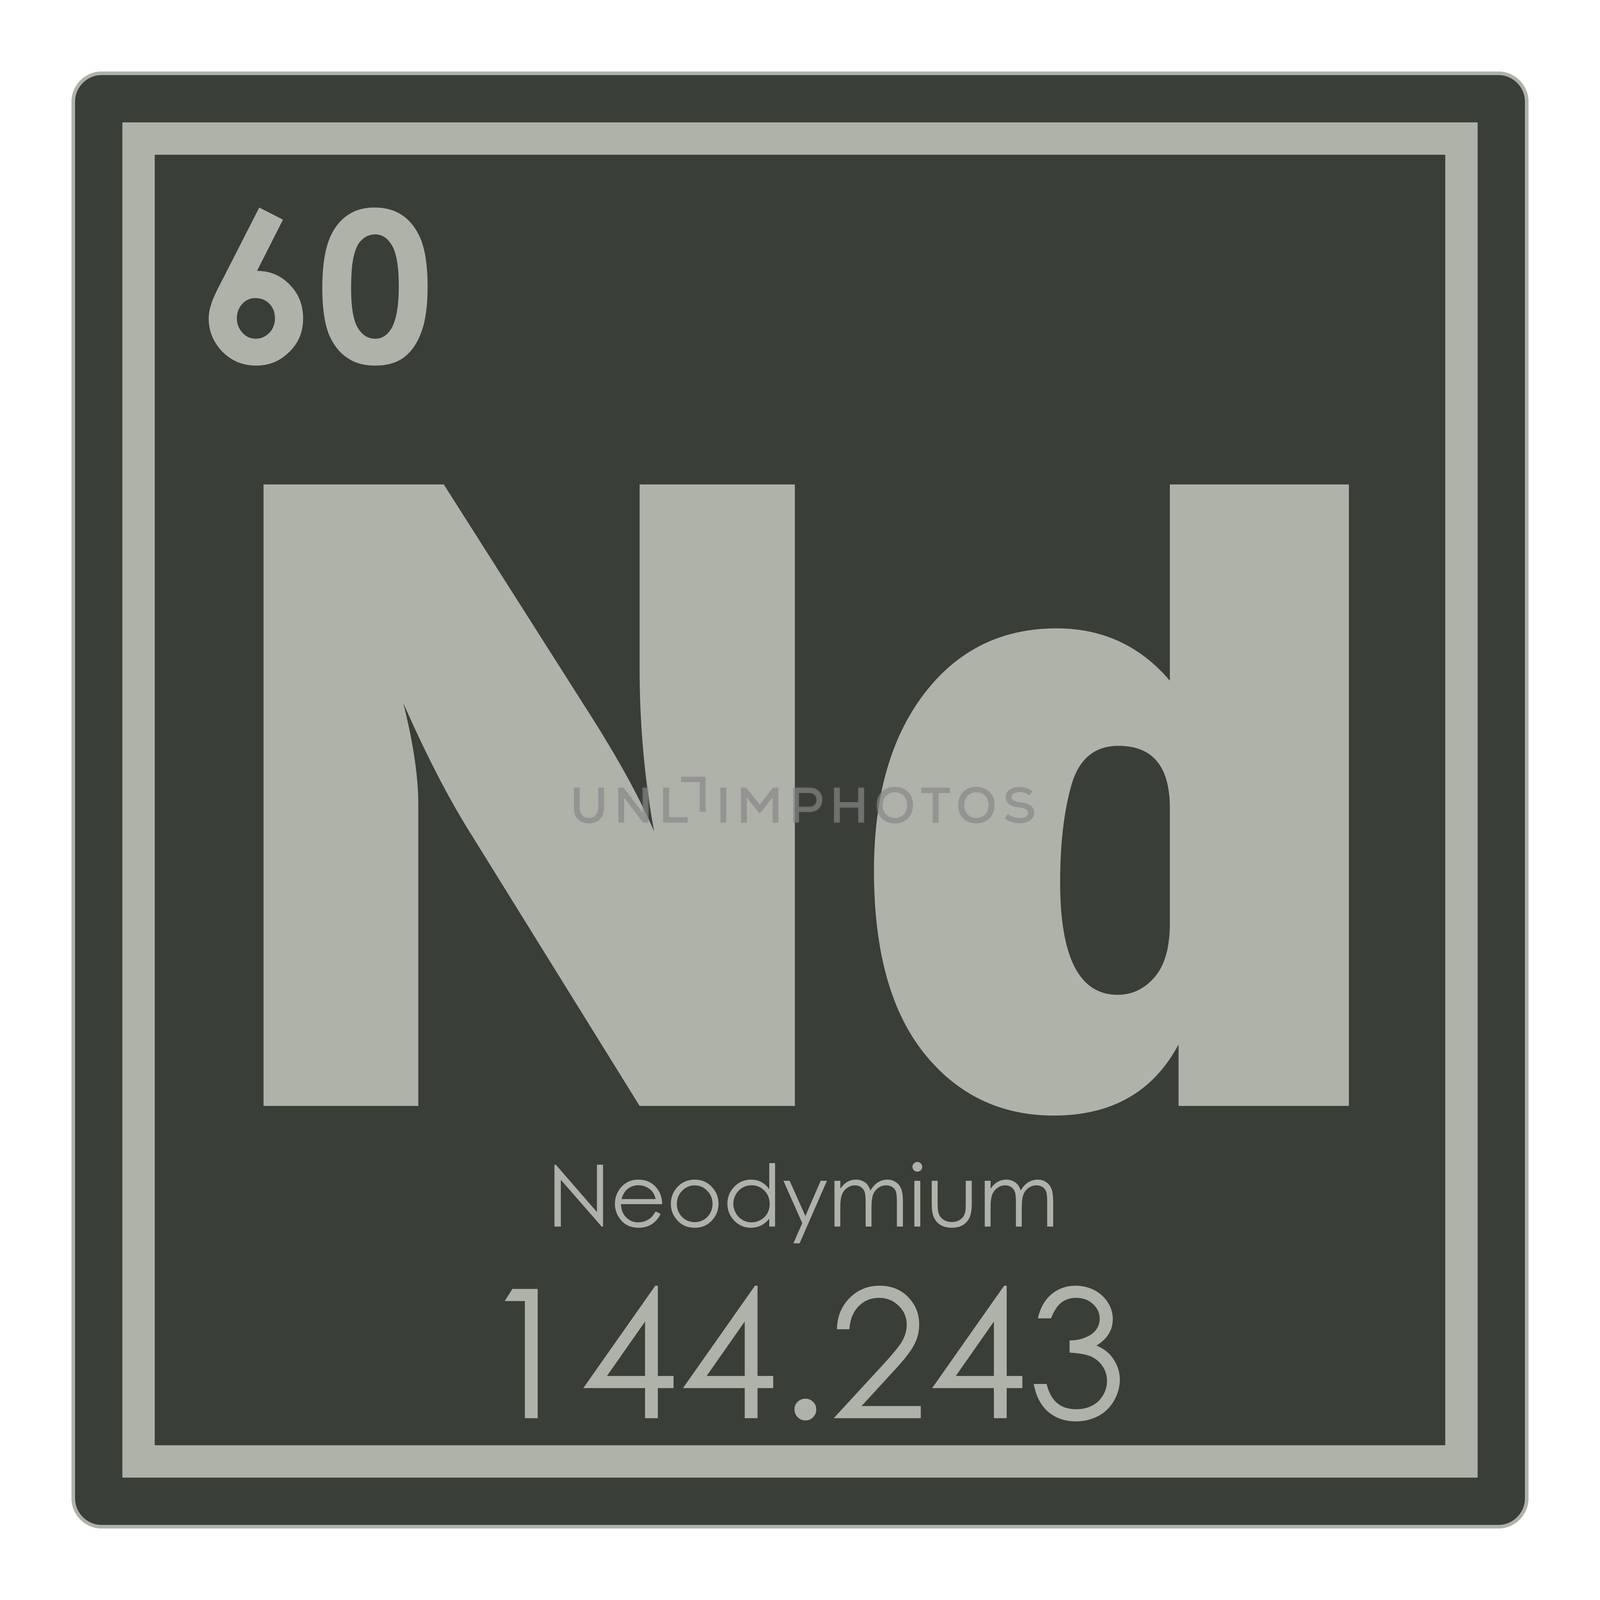 Neodymium chemical element by tony4urban